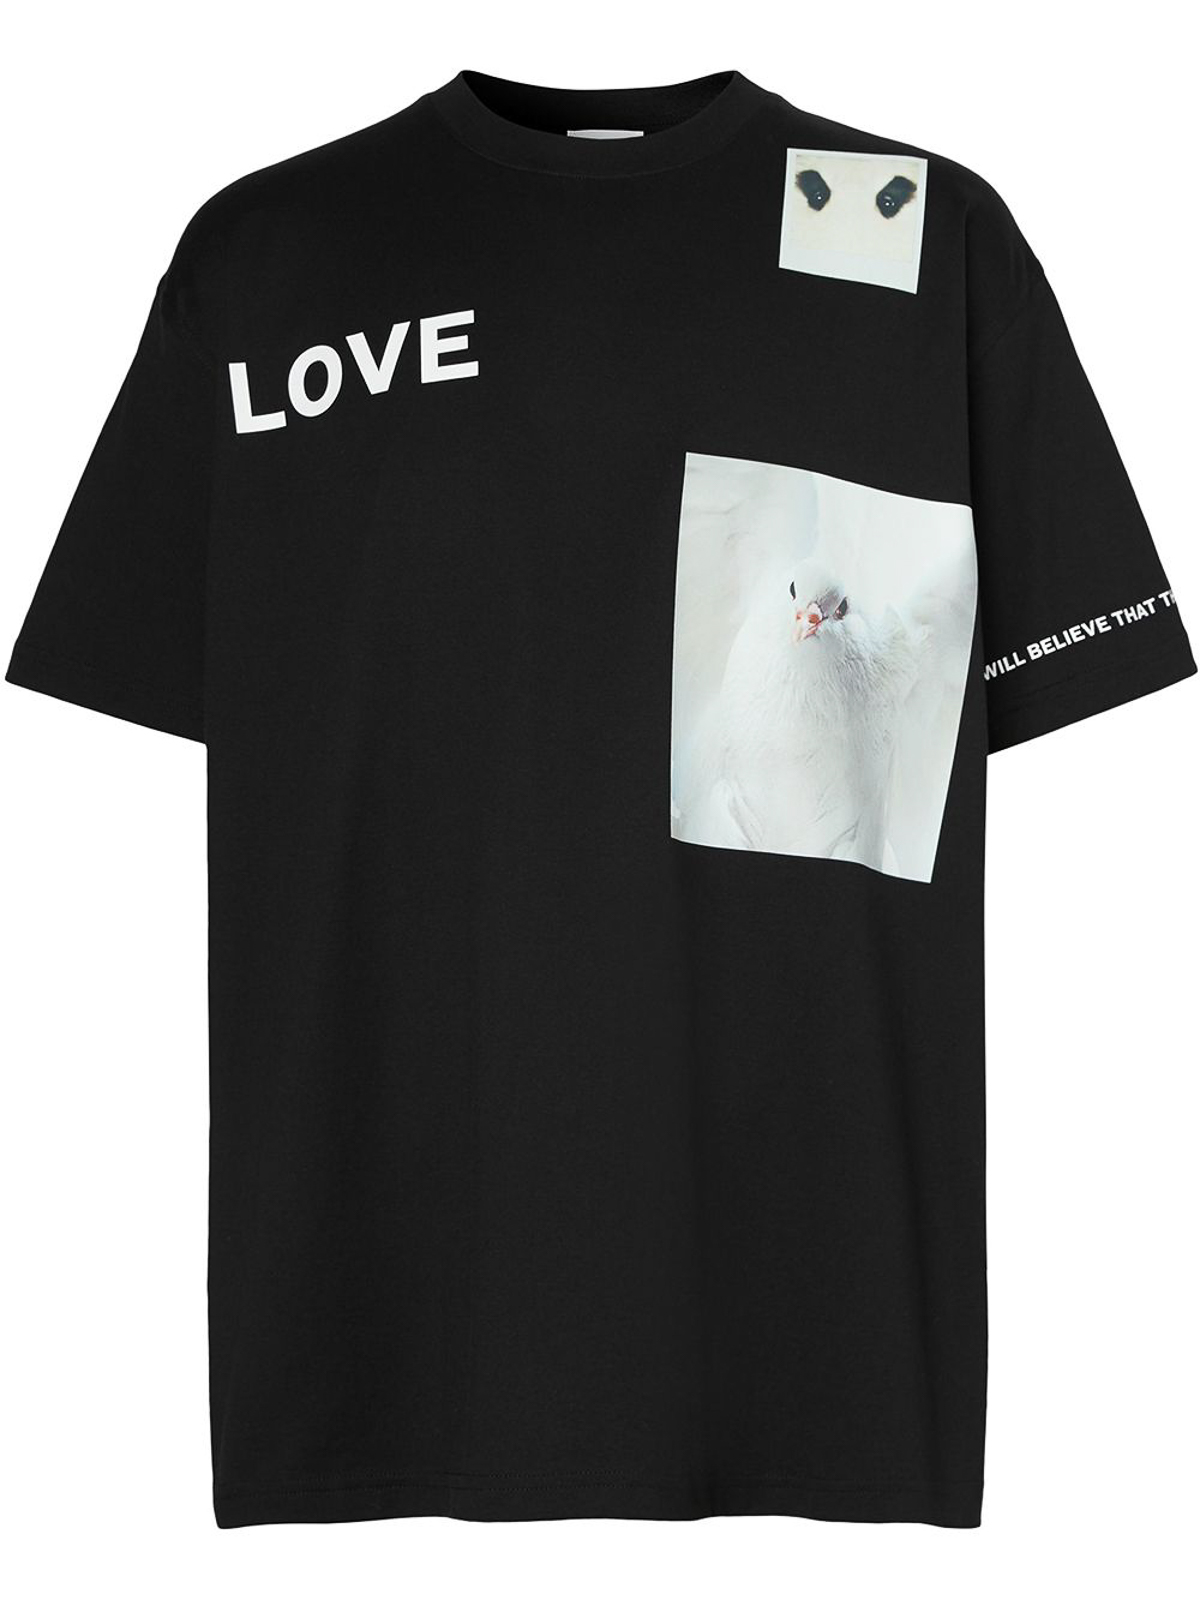 Tシャツ Burberry - Tシャツ - 黒 - 8030940 | iKRIX shop online